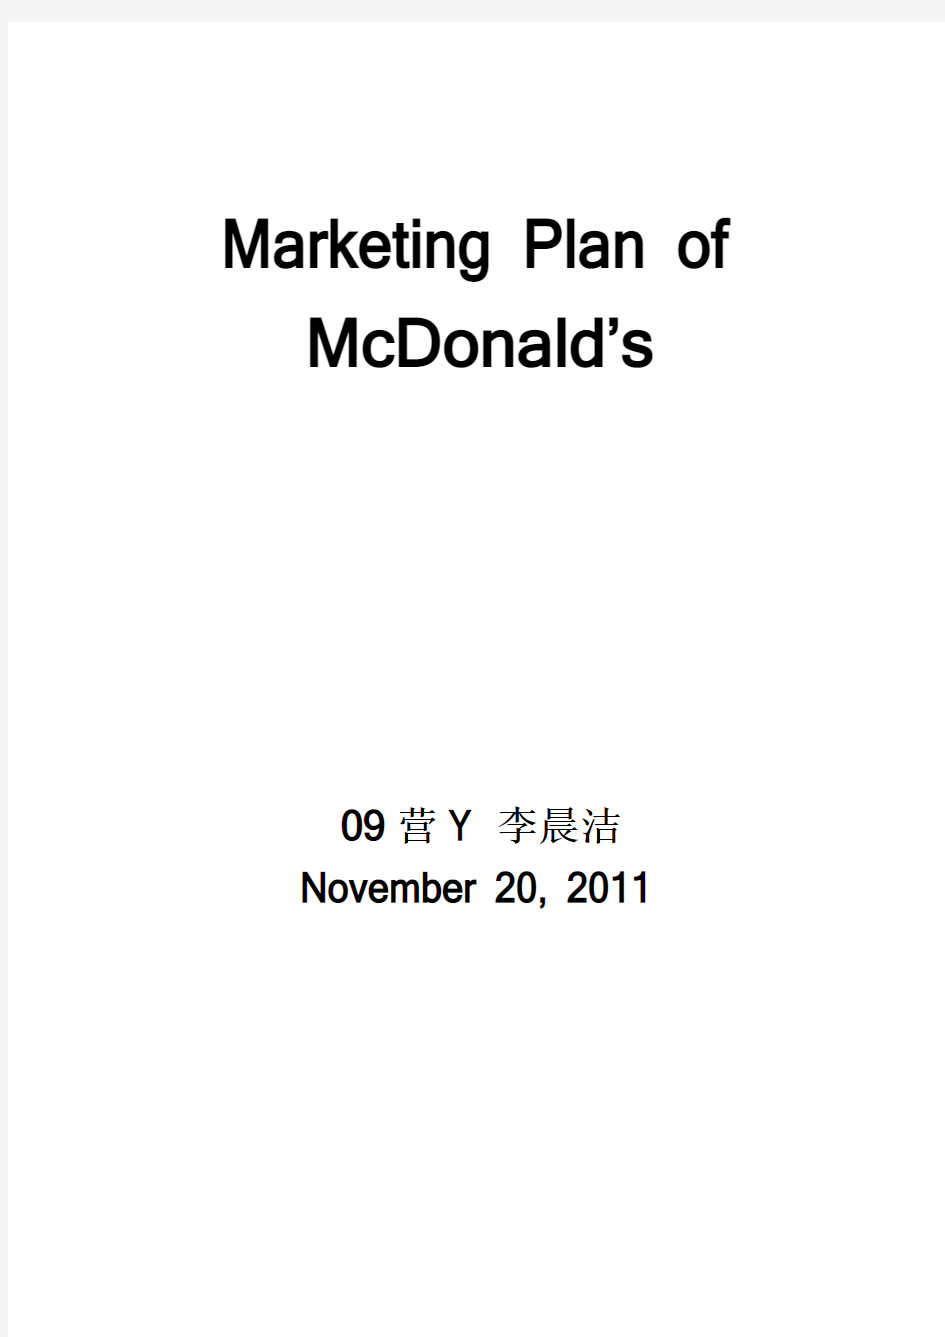 Marketing Plan of McDonald